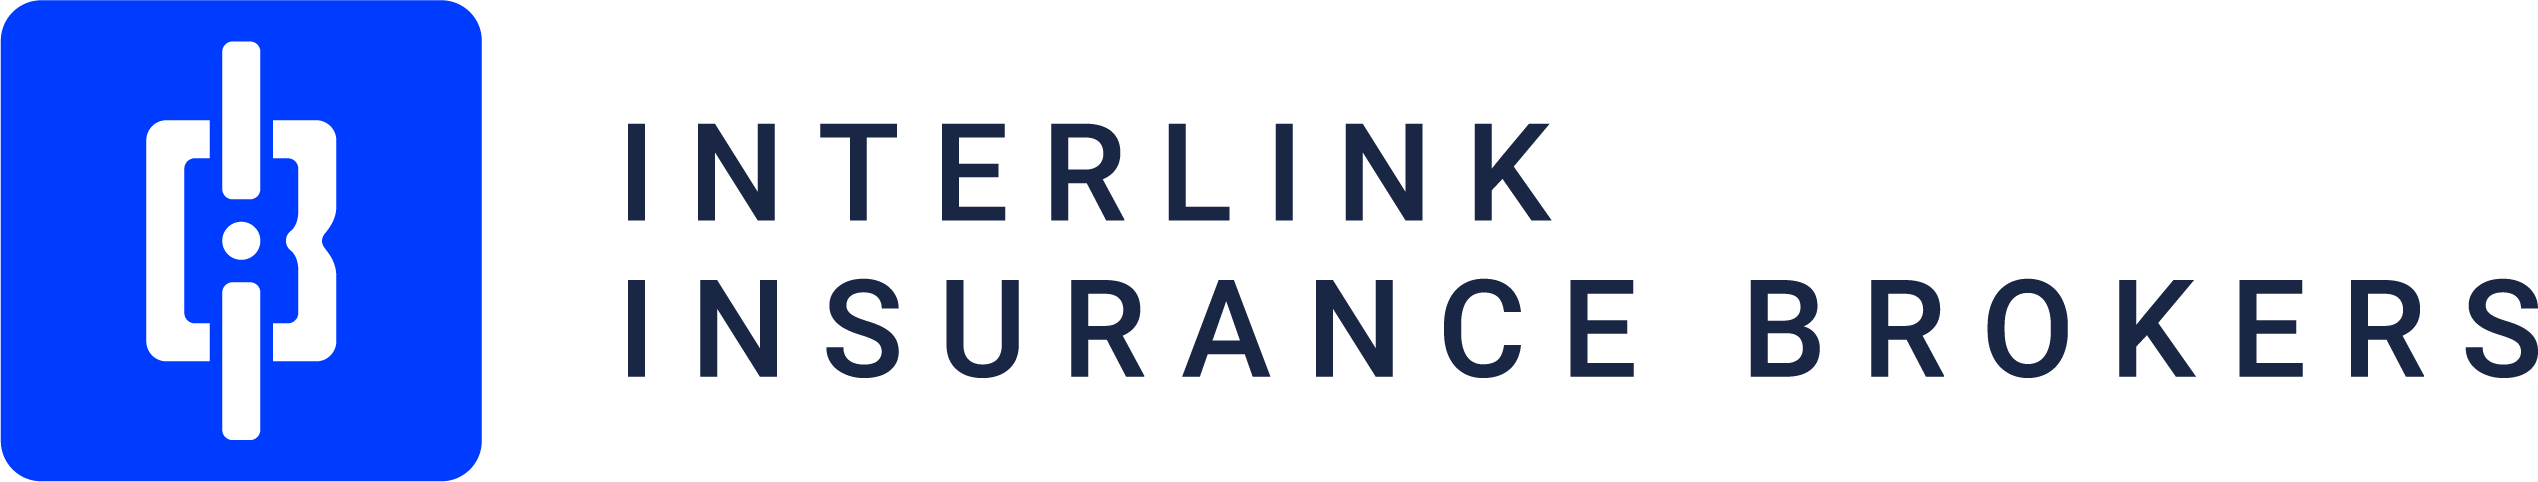 Interlink Insurance Brokers